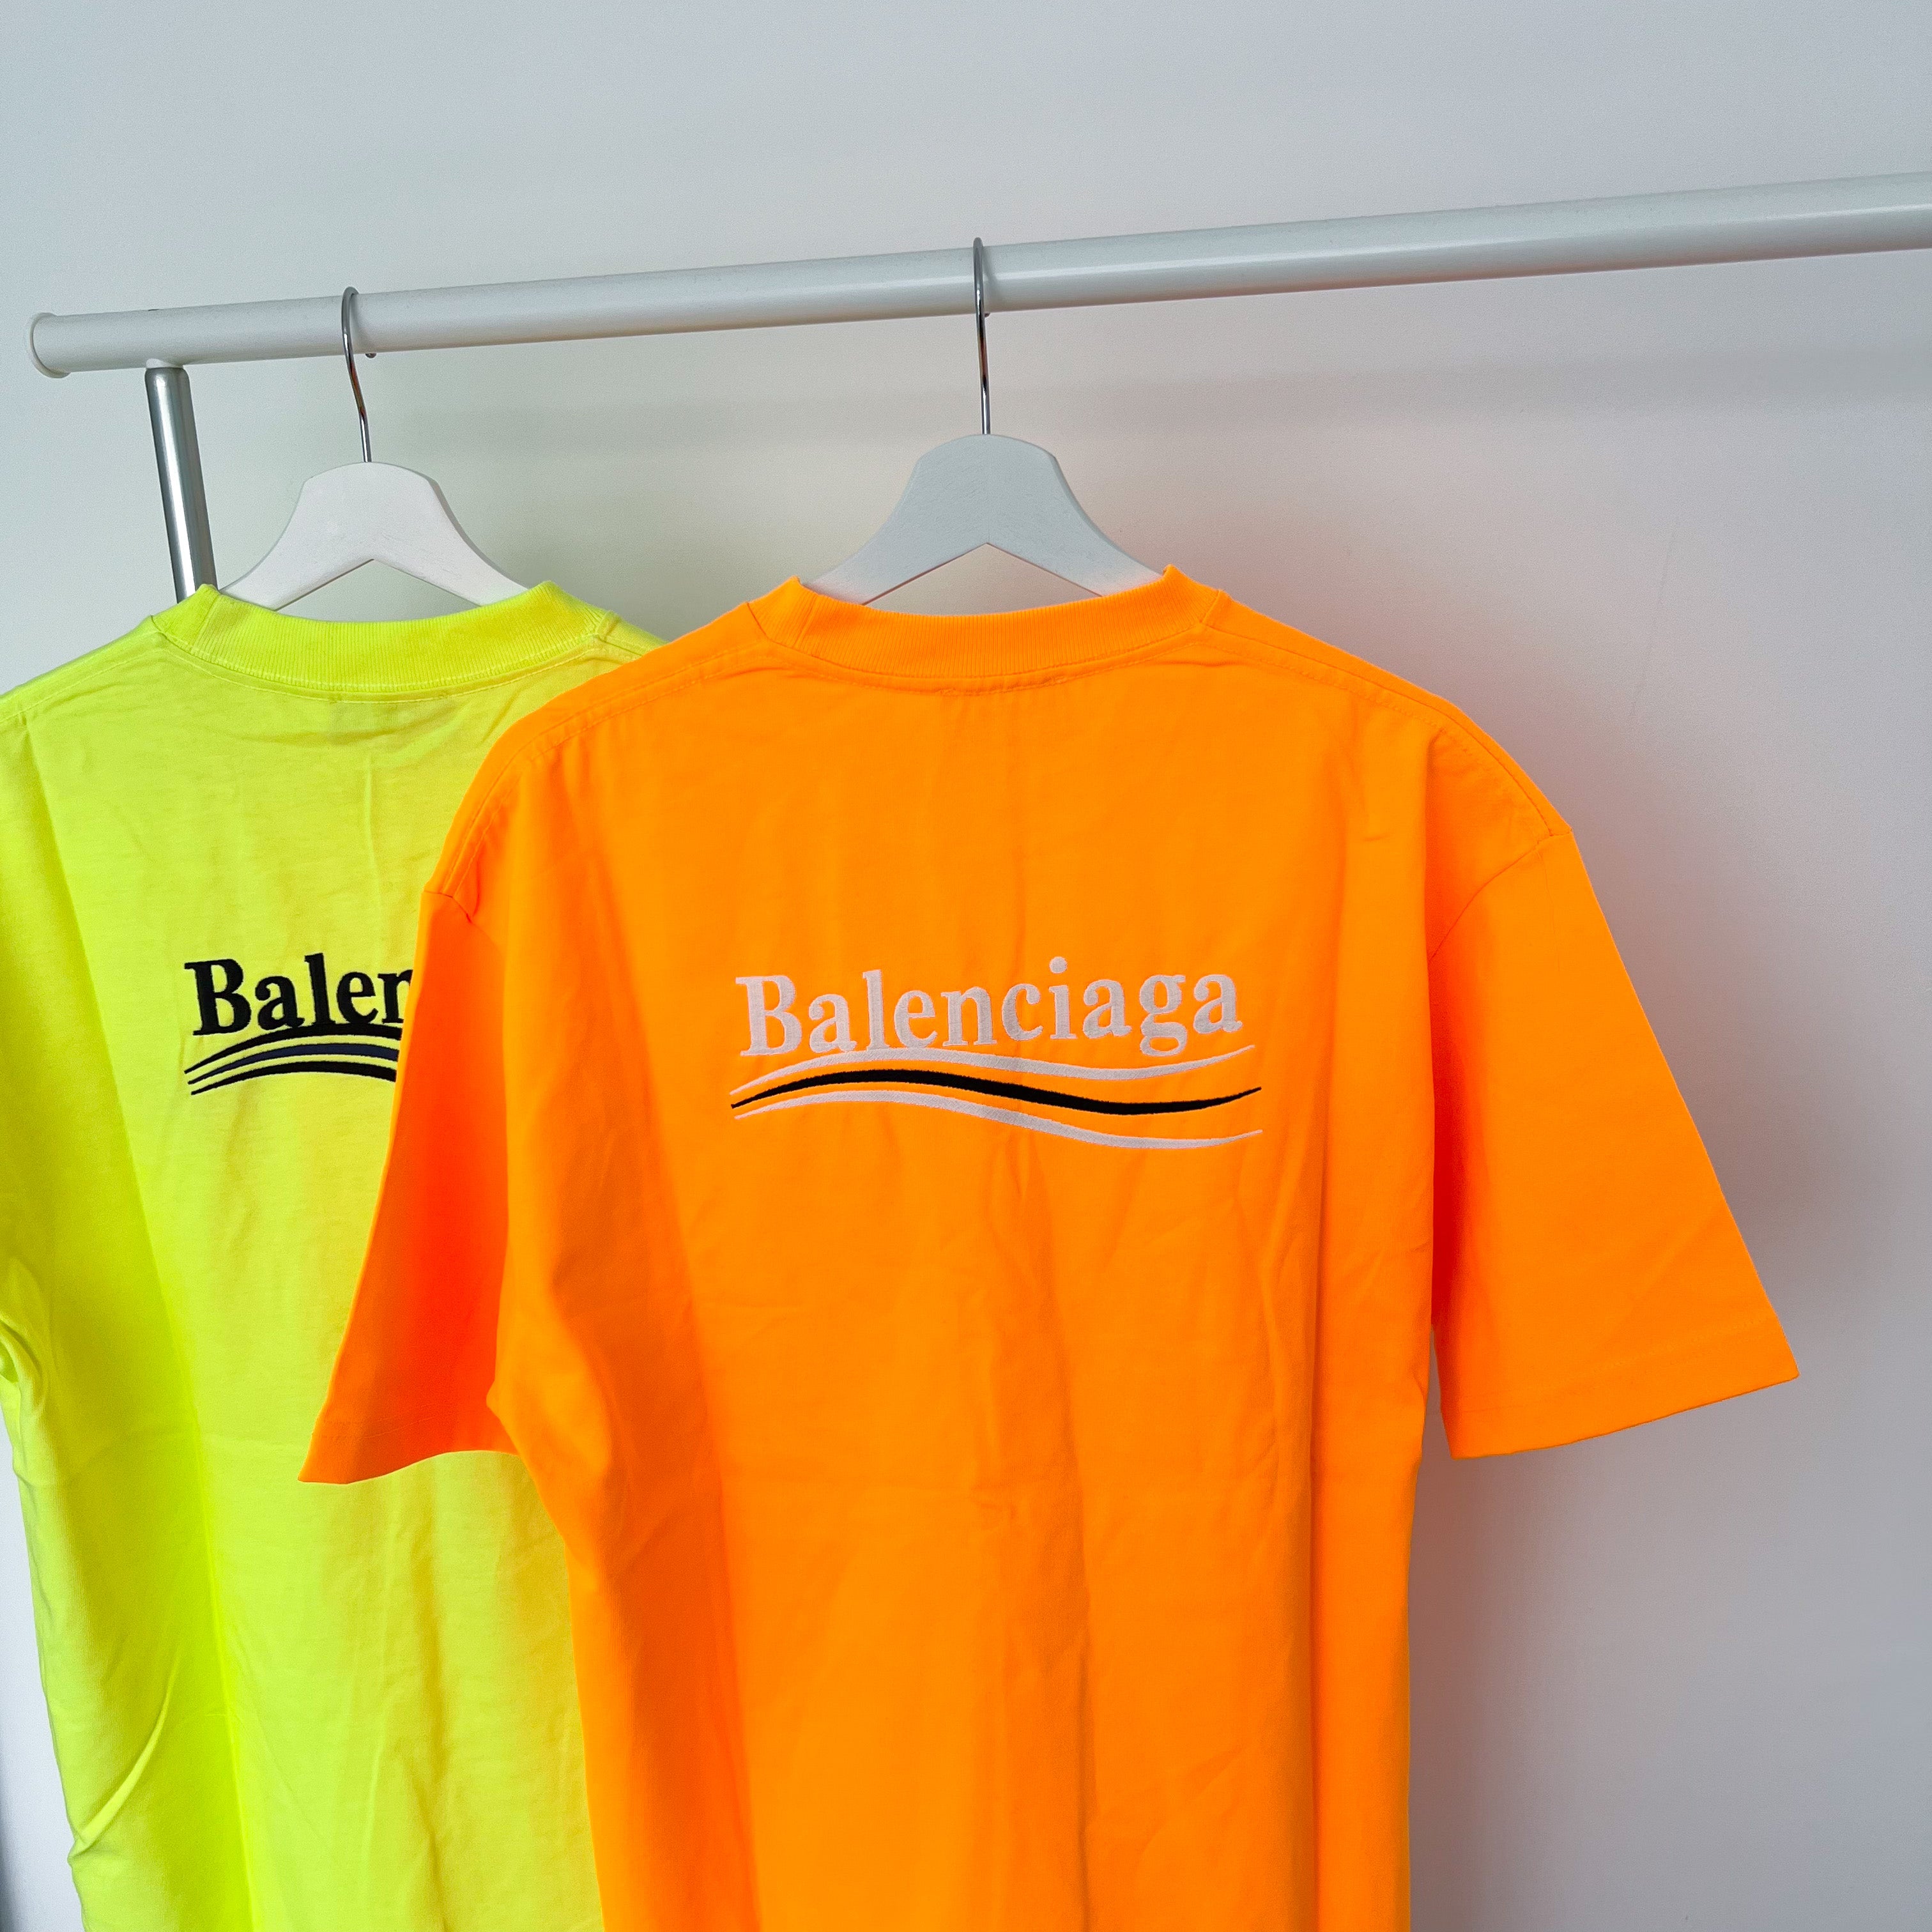 Balenciaga Embroidered Political Campaign Tee - Orange